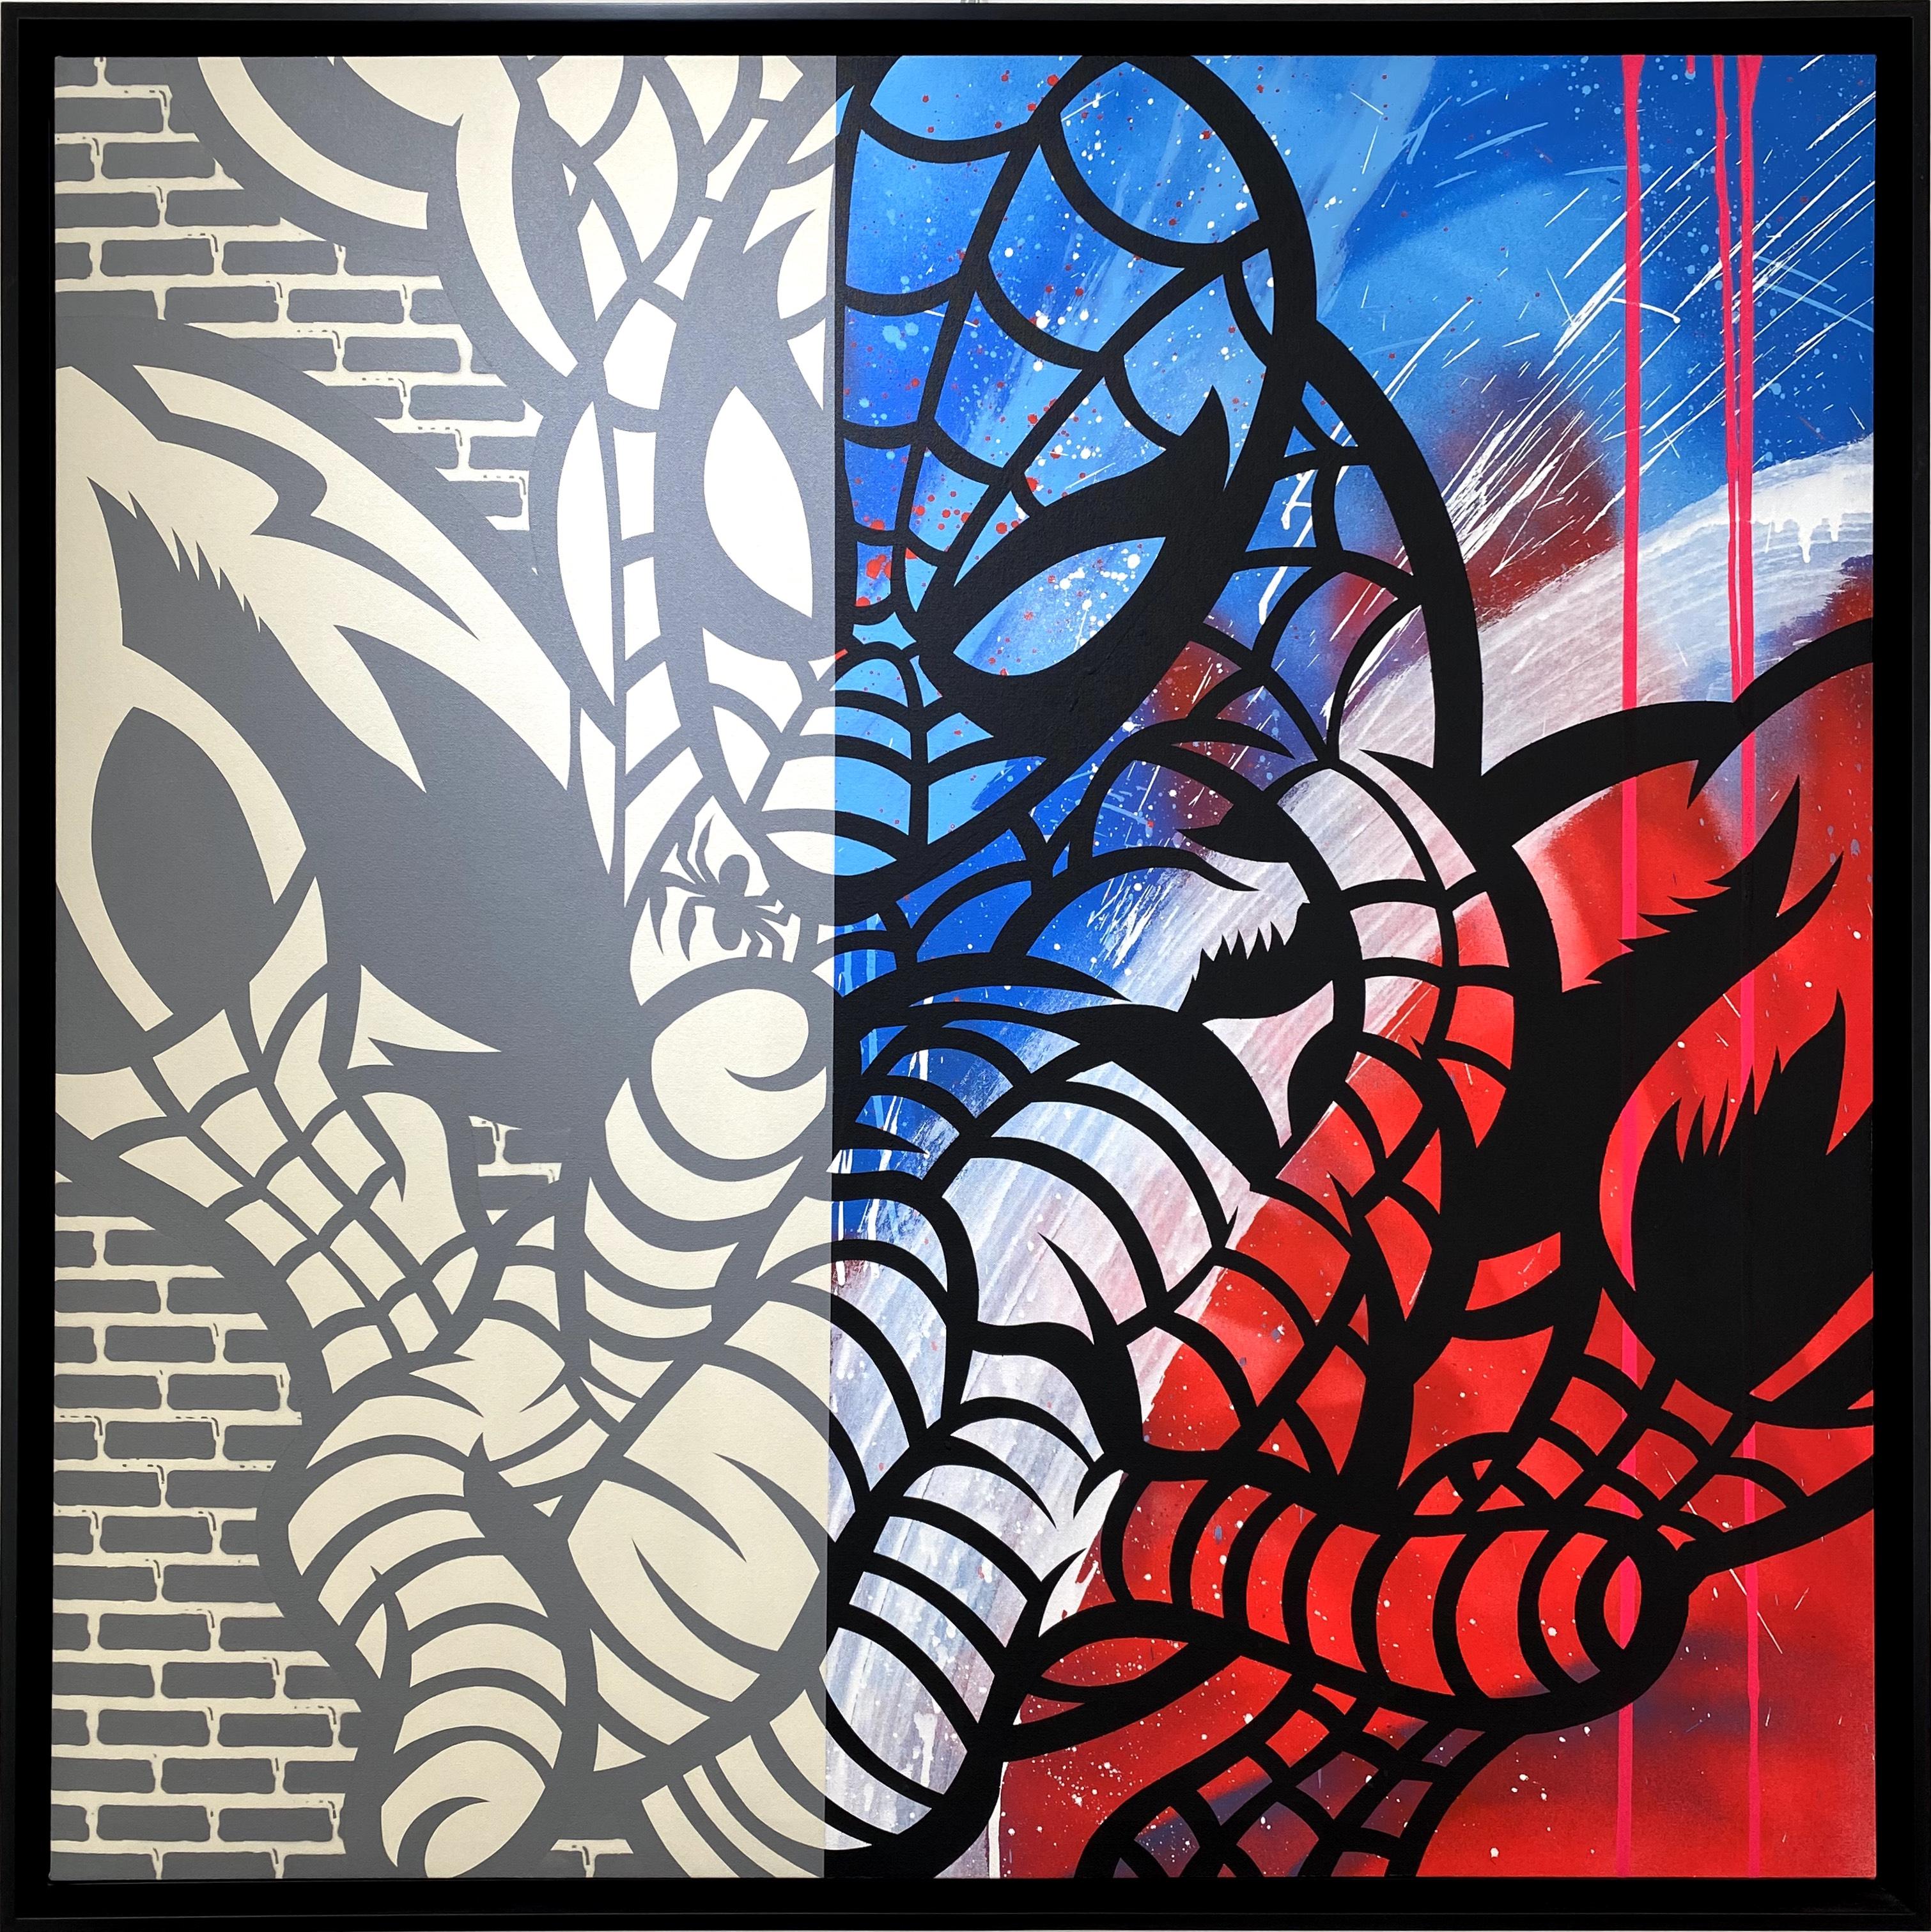 Spiderman - Street Art Painting by Seen